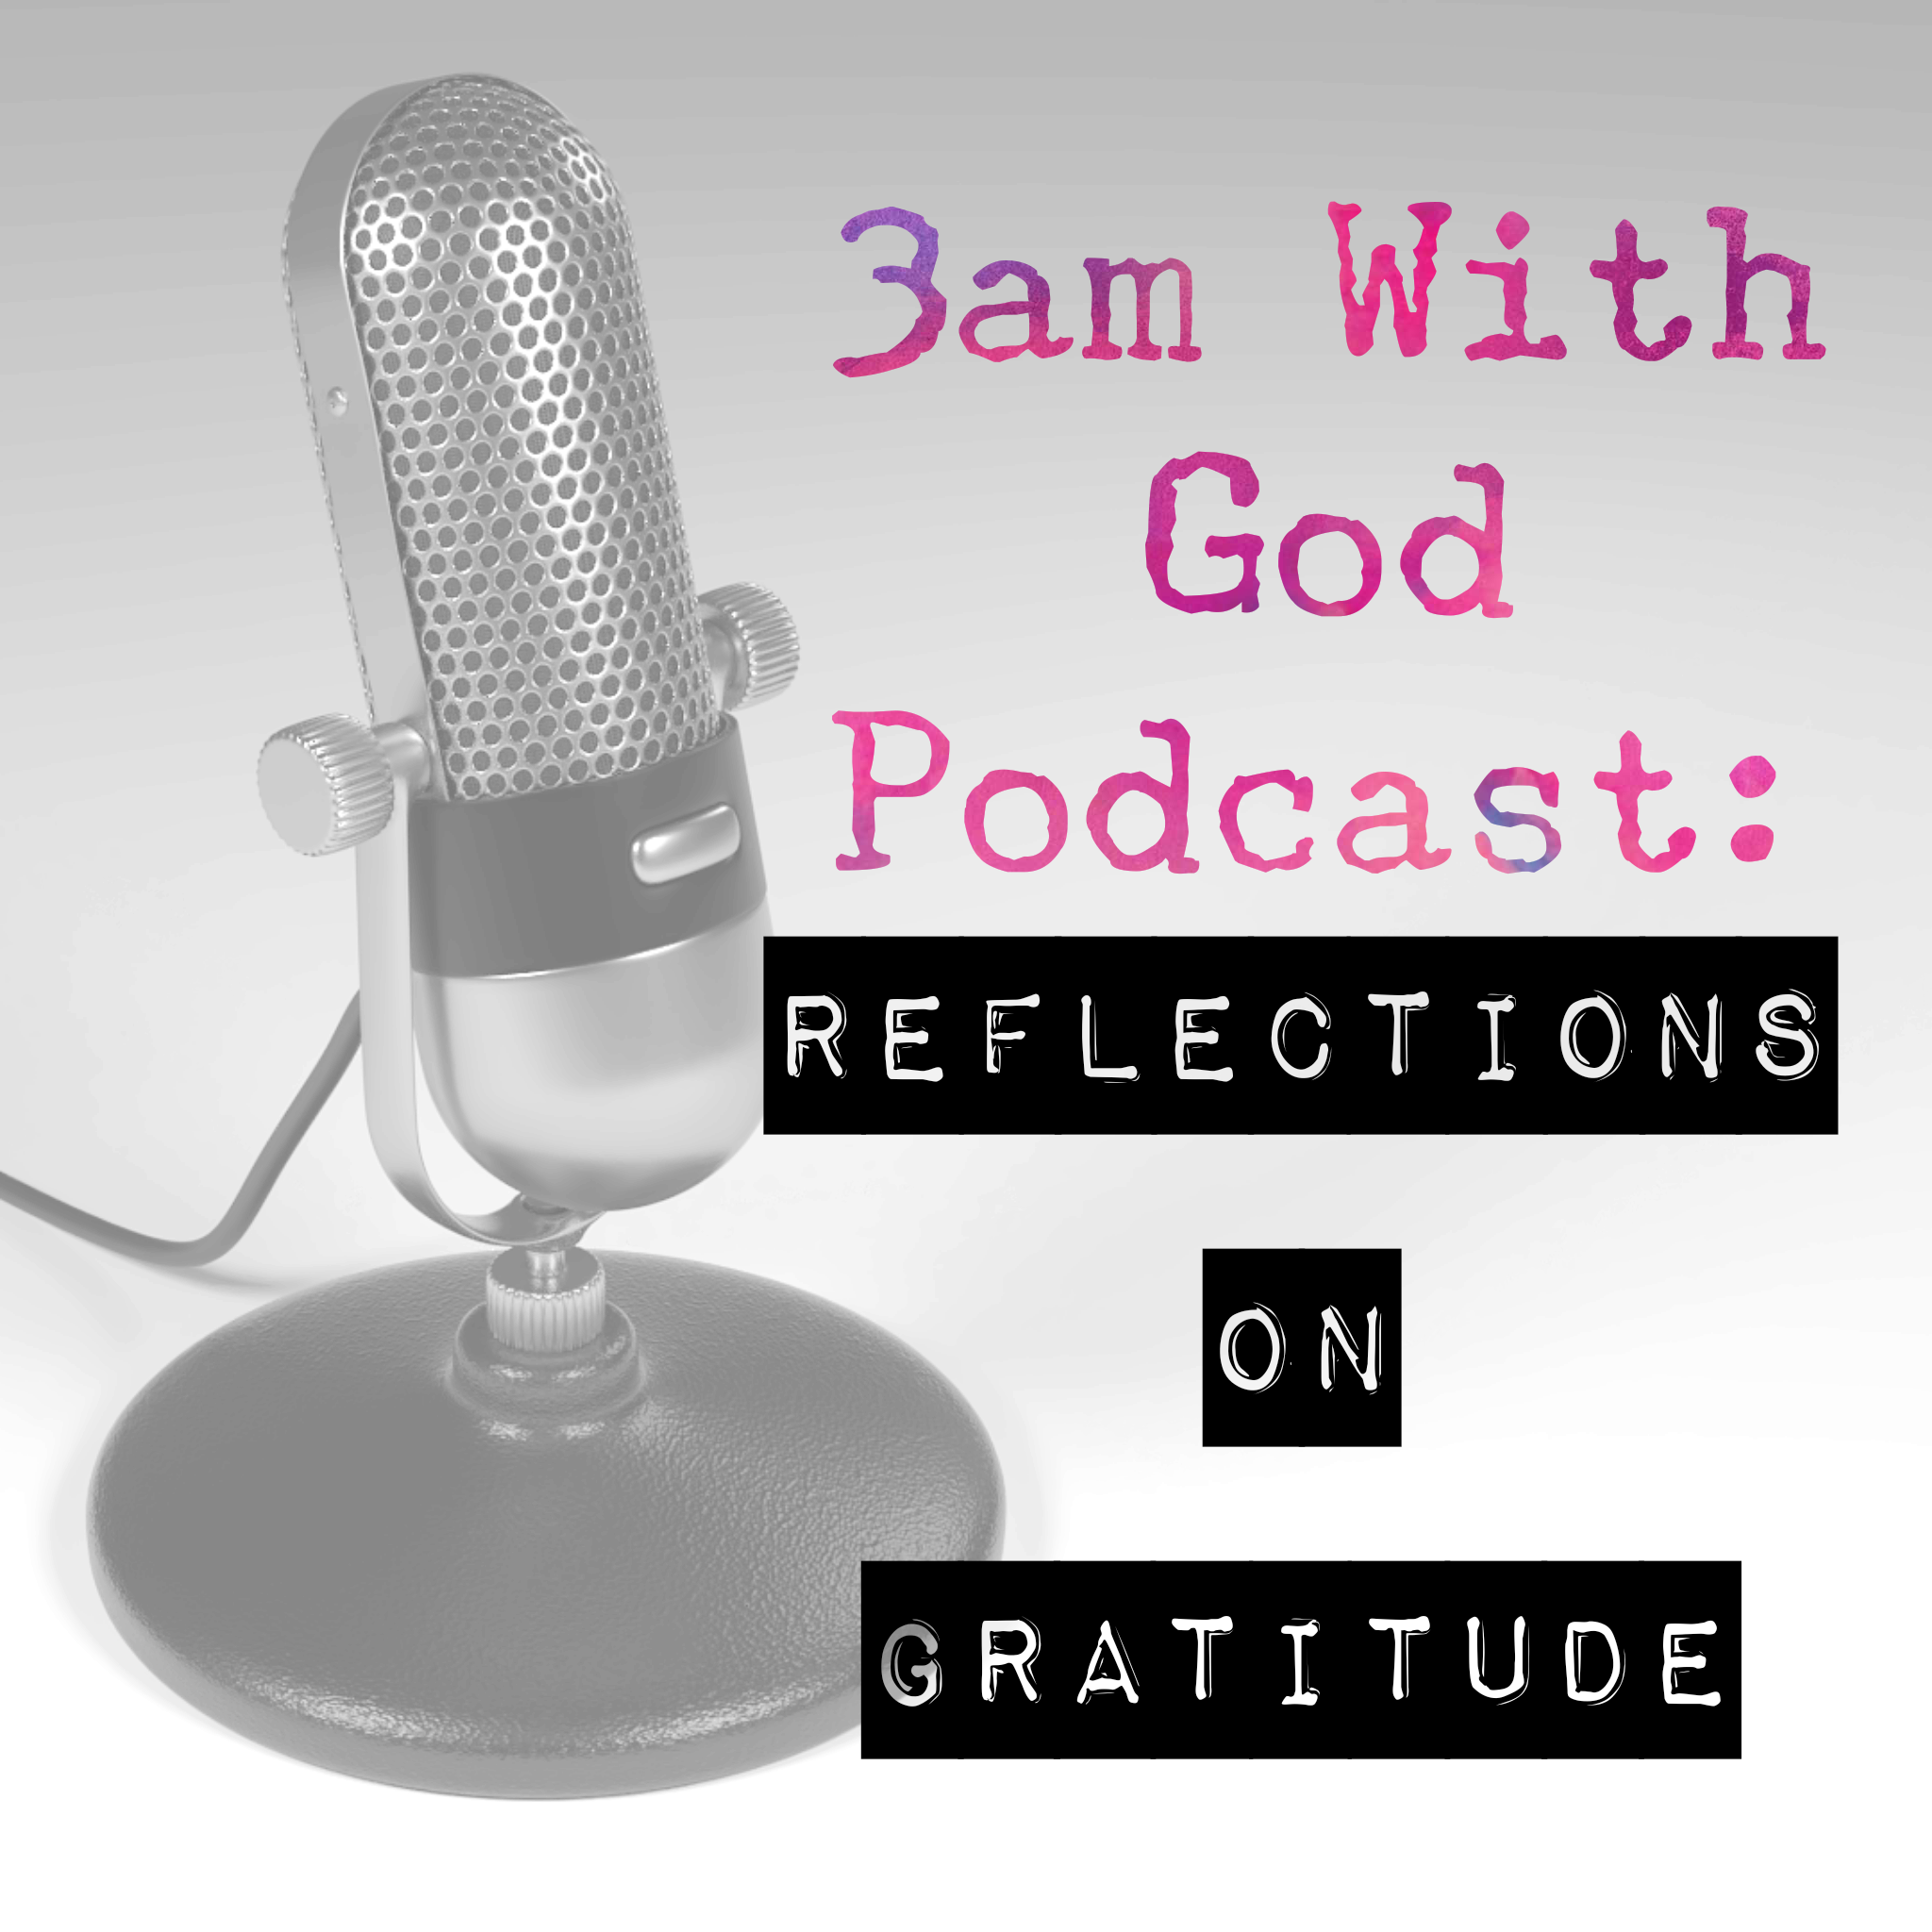 Reflections on Gratitude